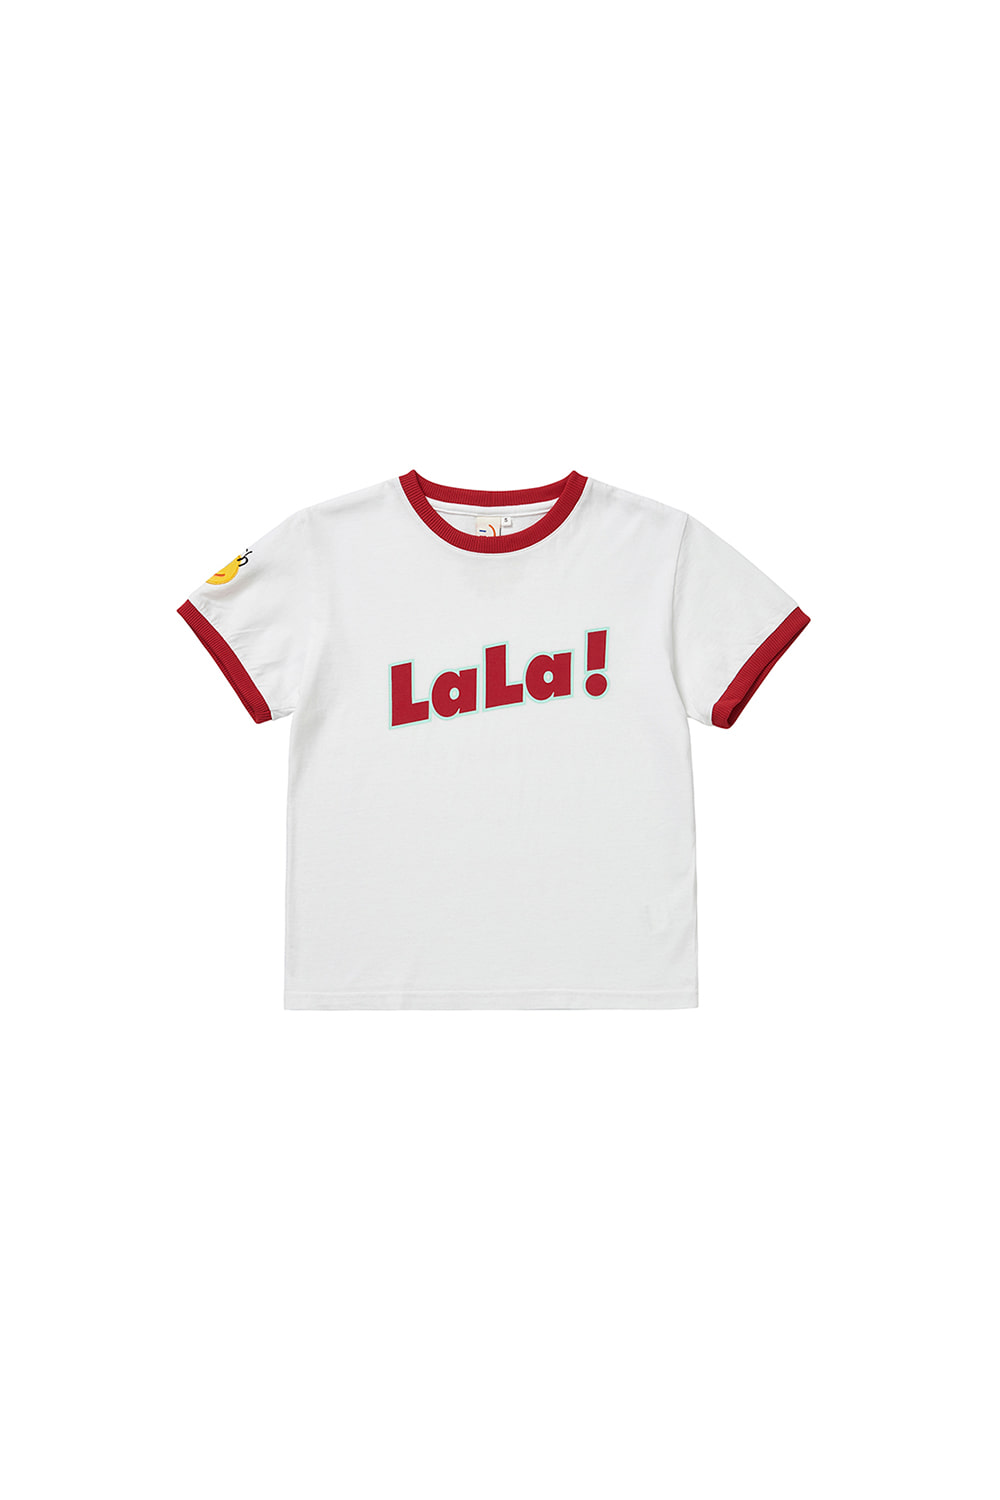 LaLa Kids Twotone T-shirt [Red]